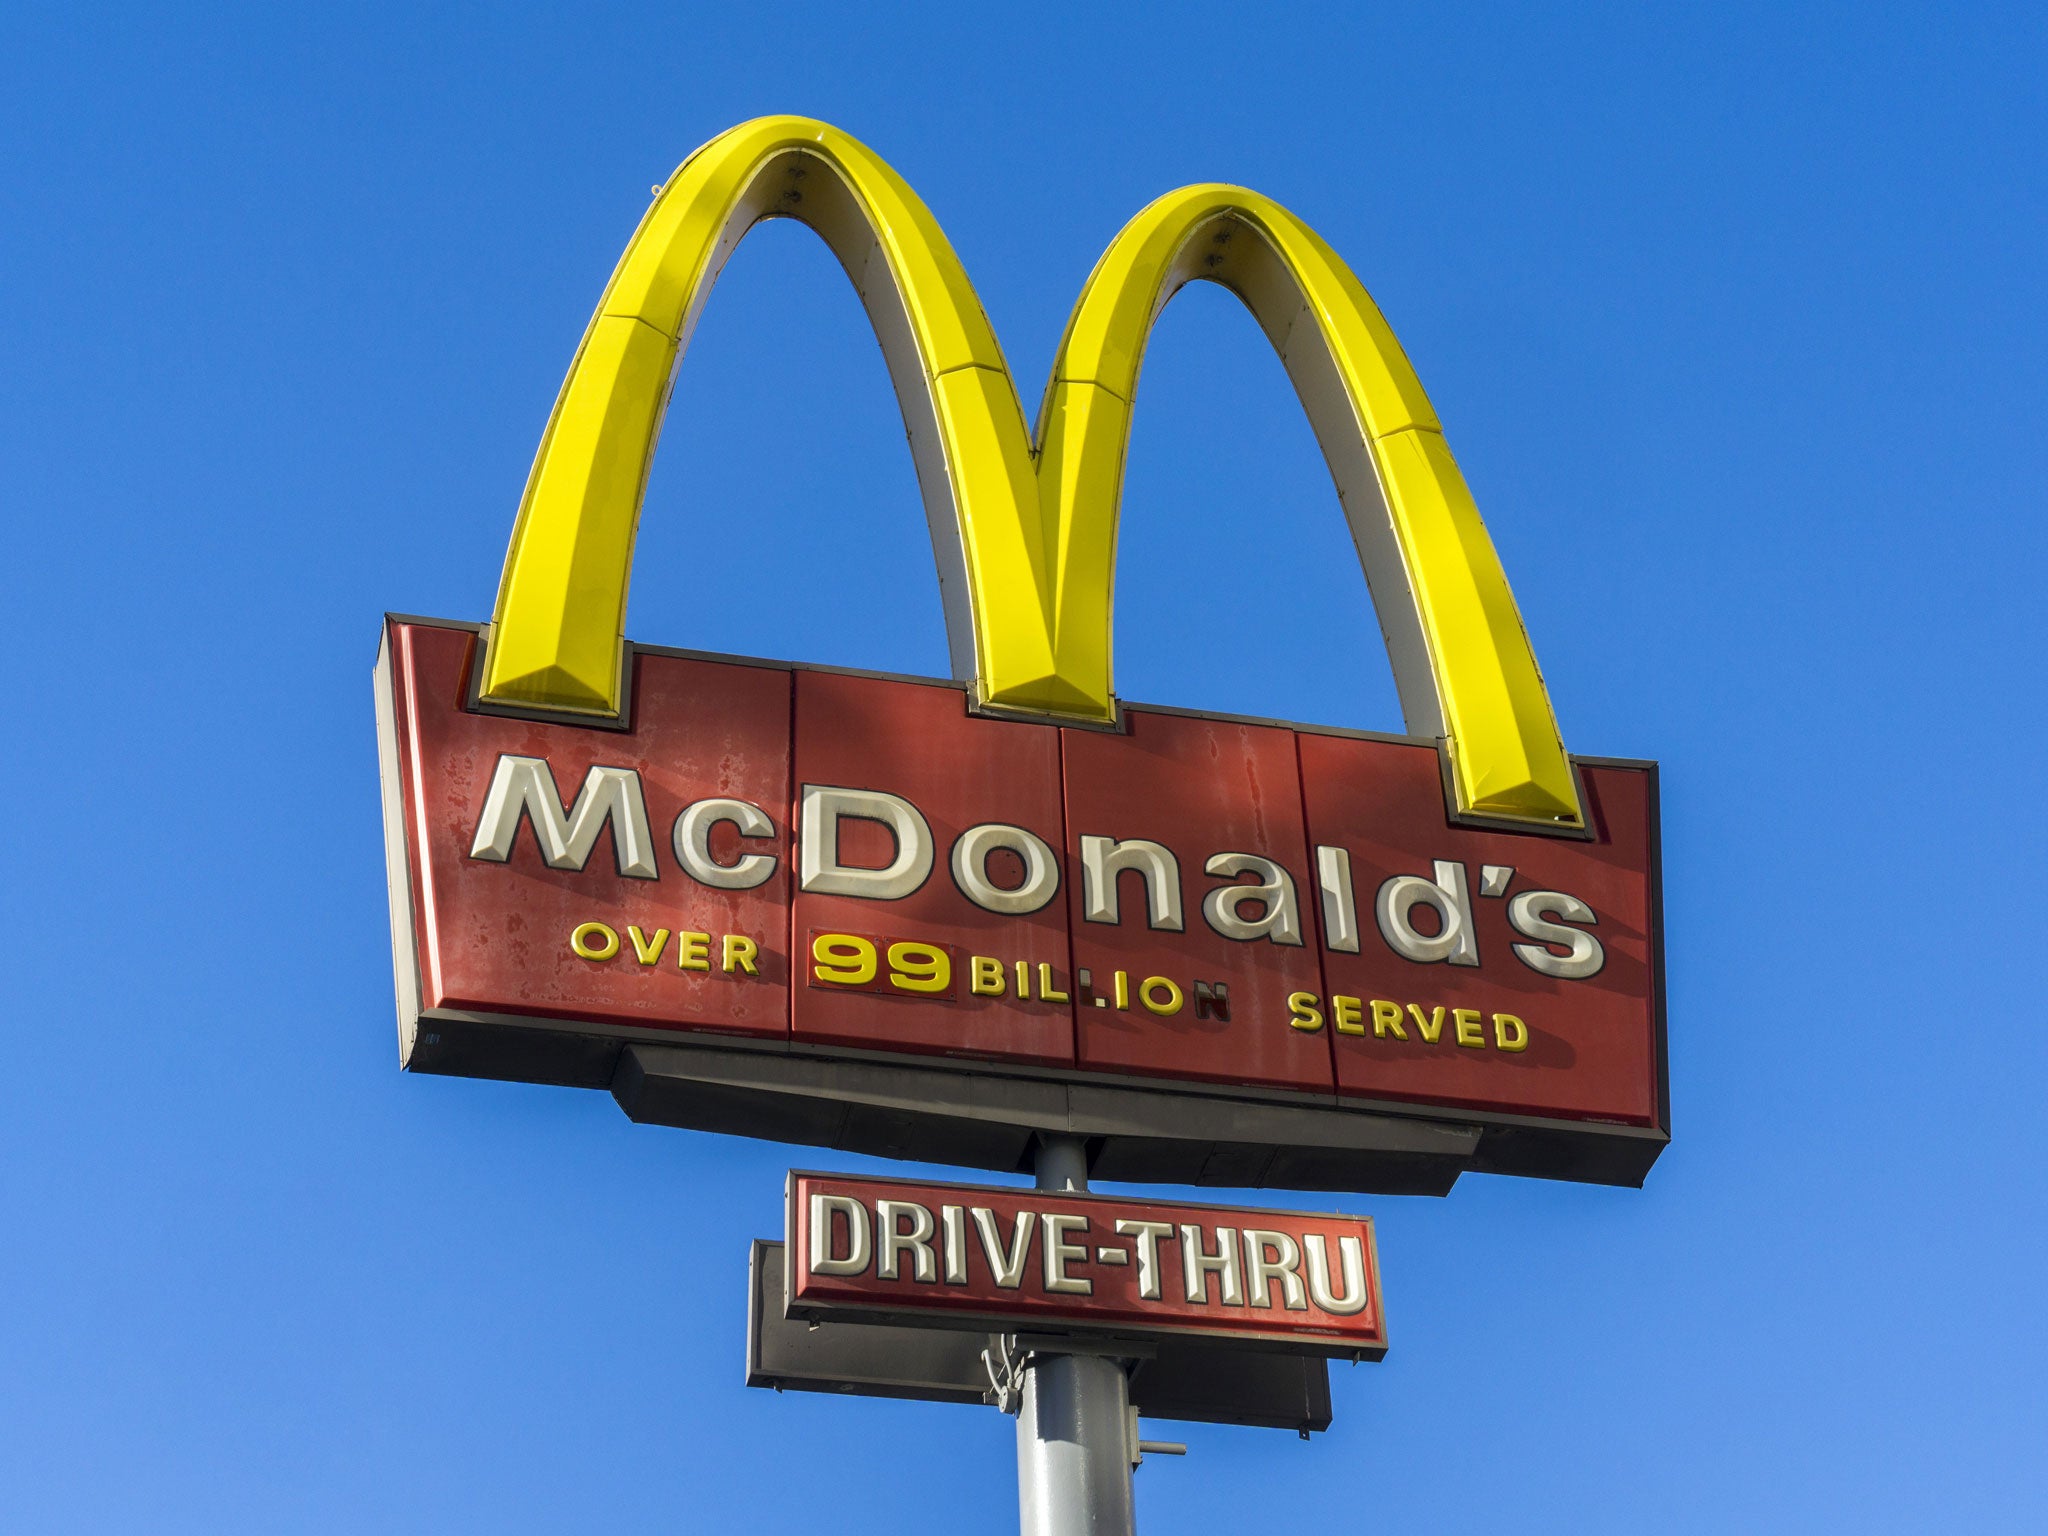 Three-quarters of McDonald's restaurants in Europe are franchises